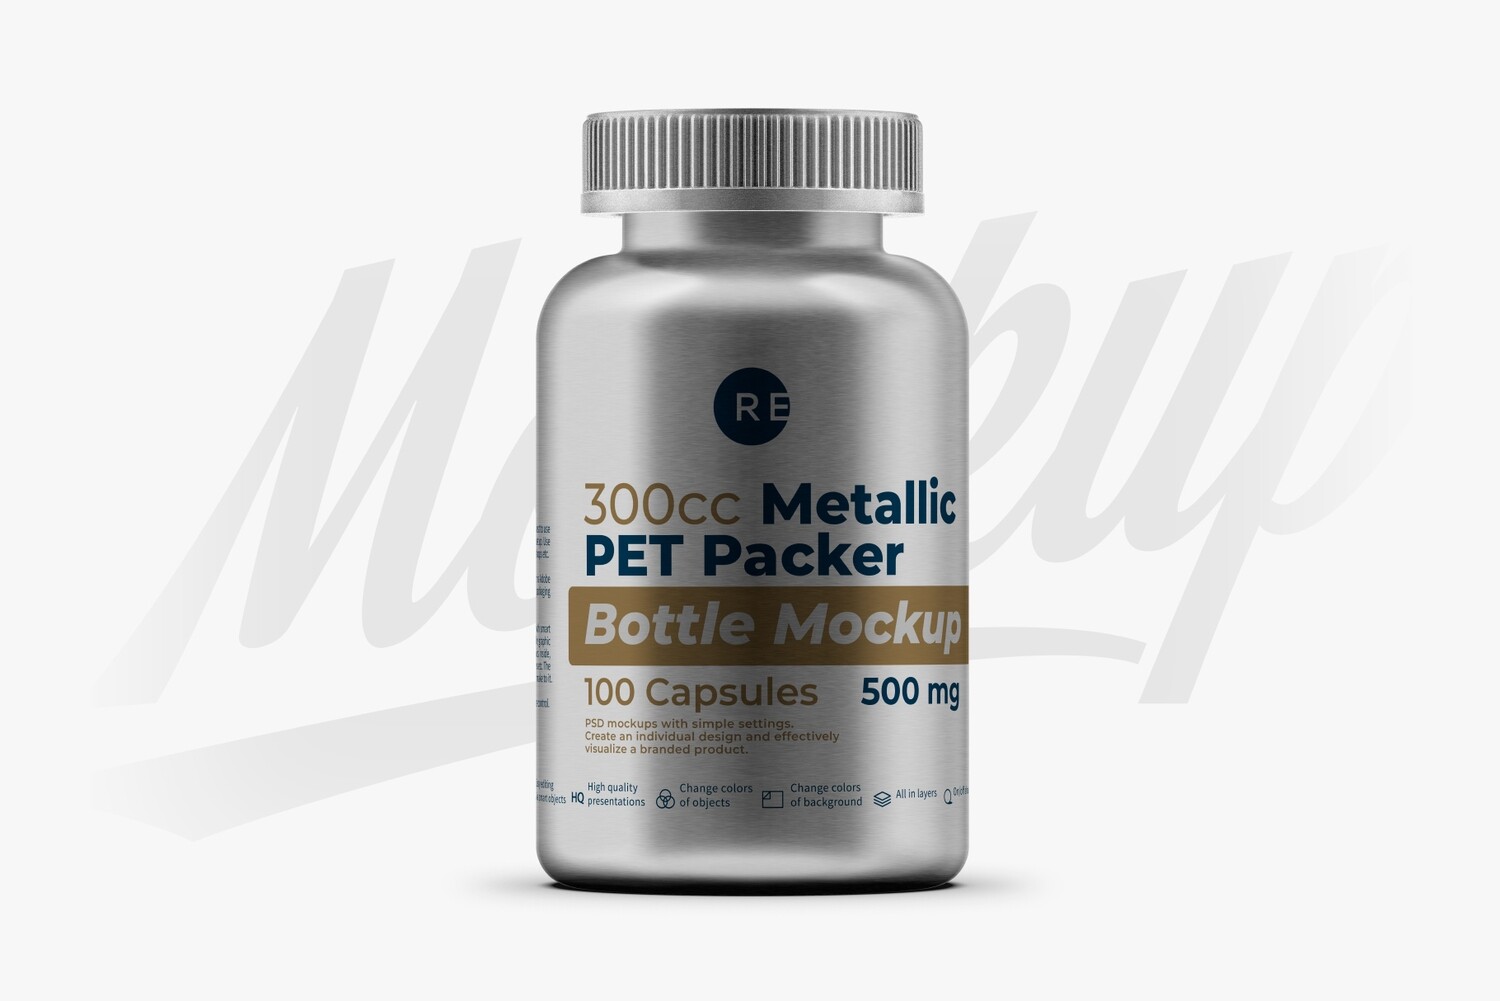 Metallic Plastic Pills Bottle Mockup 300cc